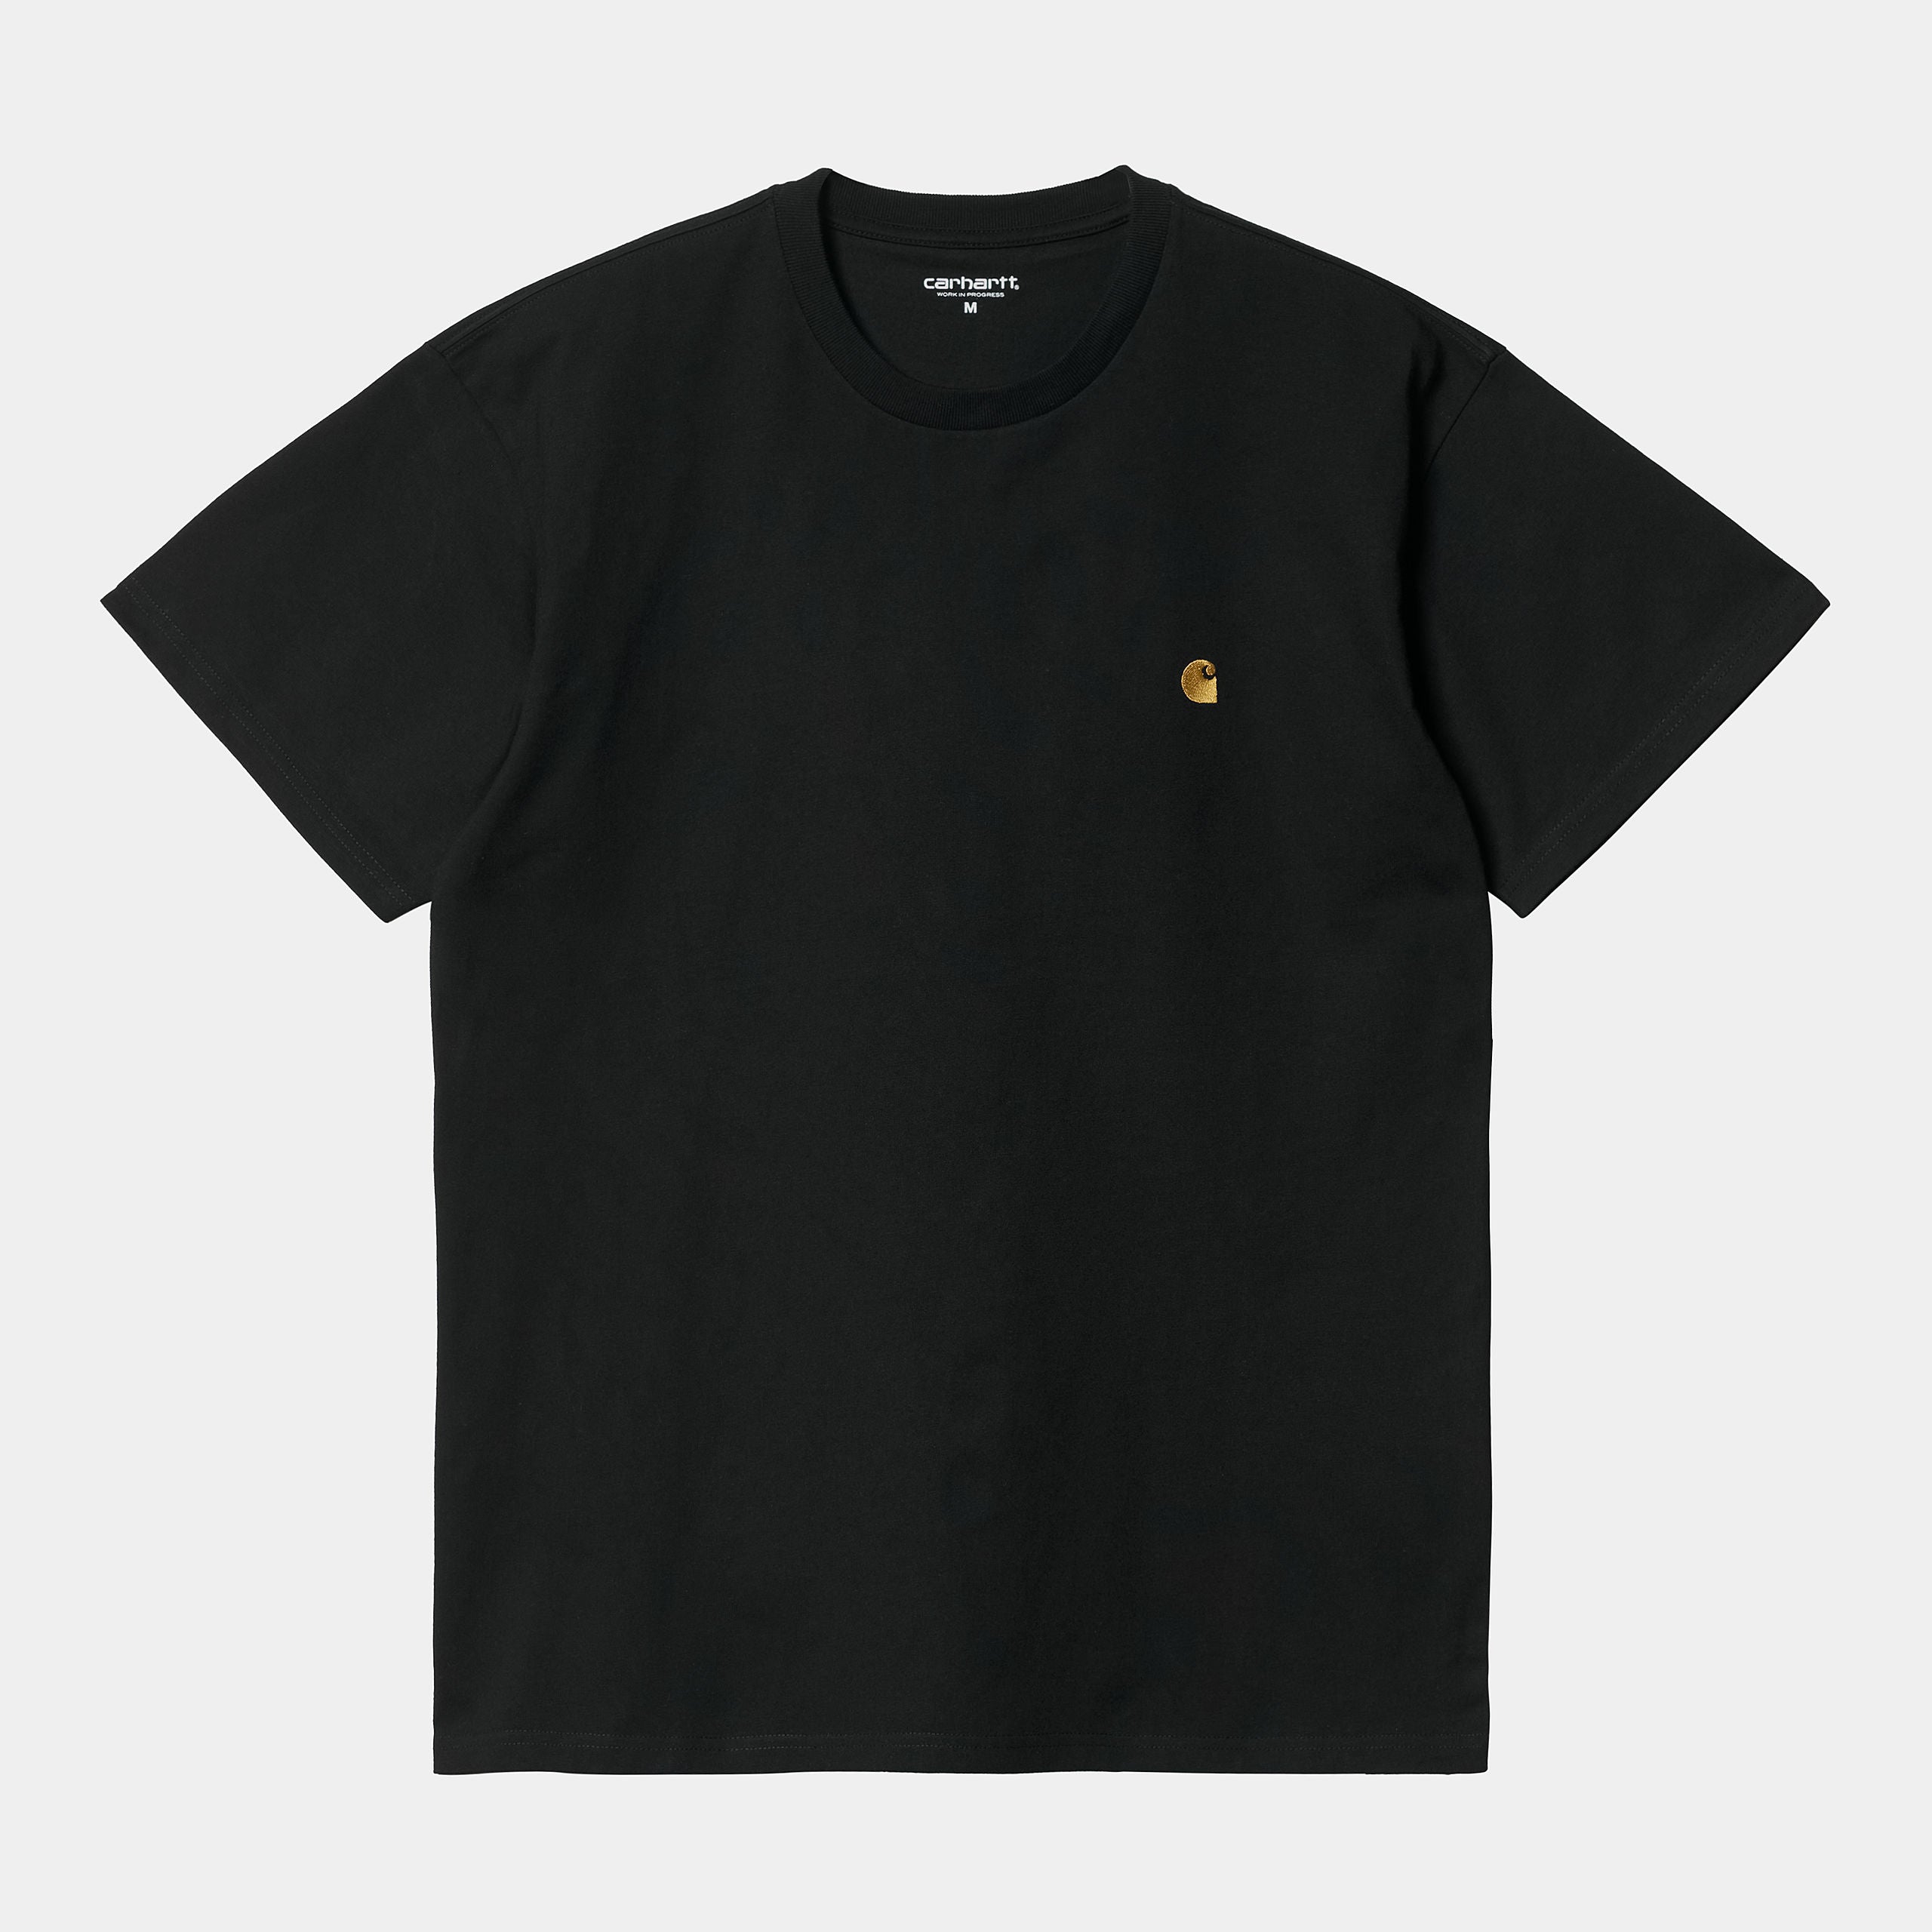 Carhartt WIP S/S Chase T Shirt Black/Gold S M L XL